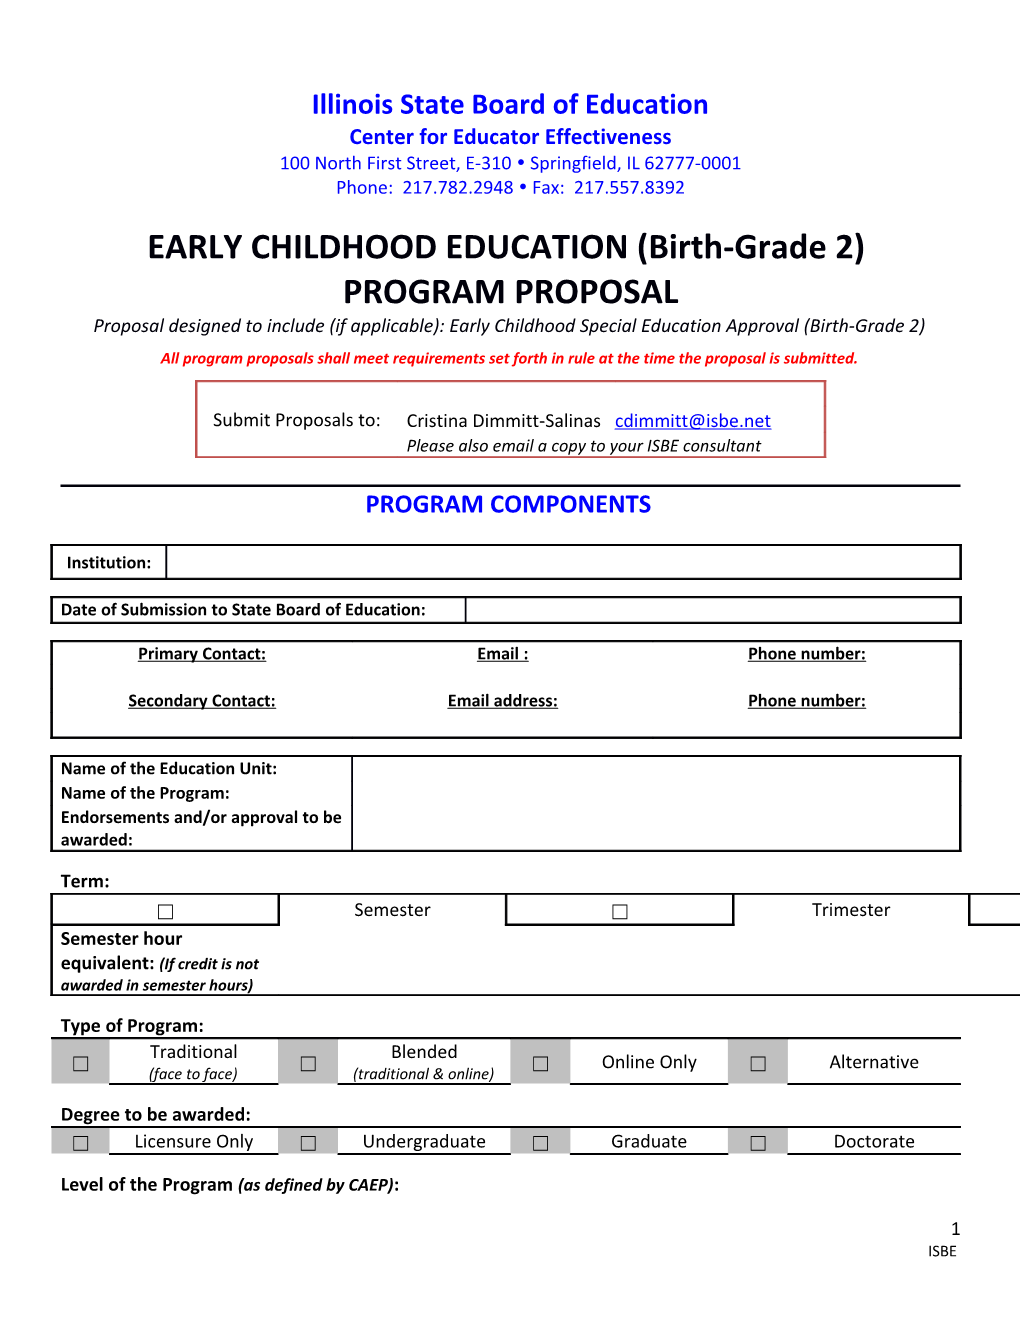 Early Childhood (B-Gr. 2) Program Proposal